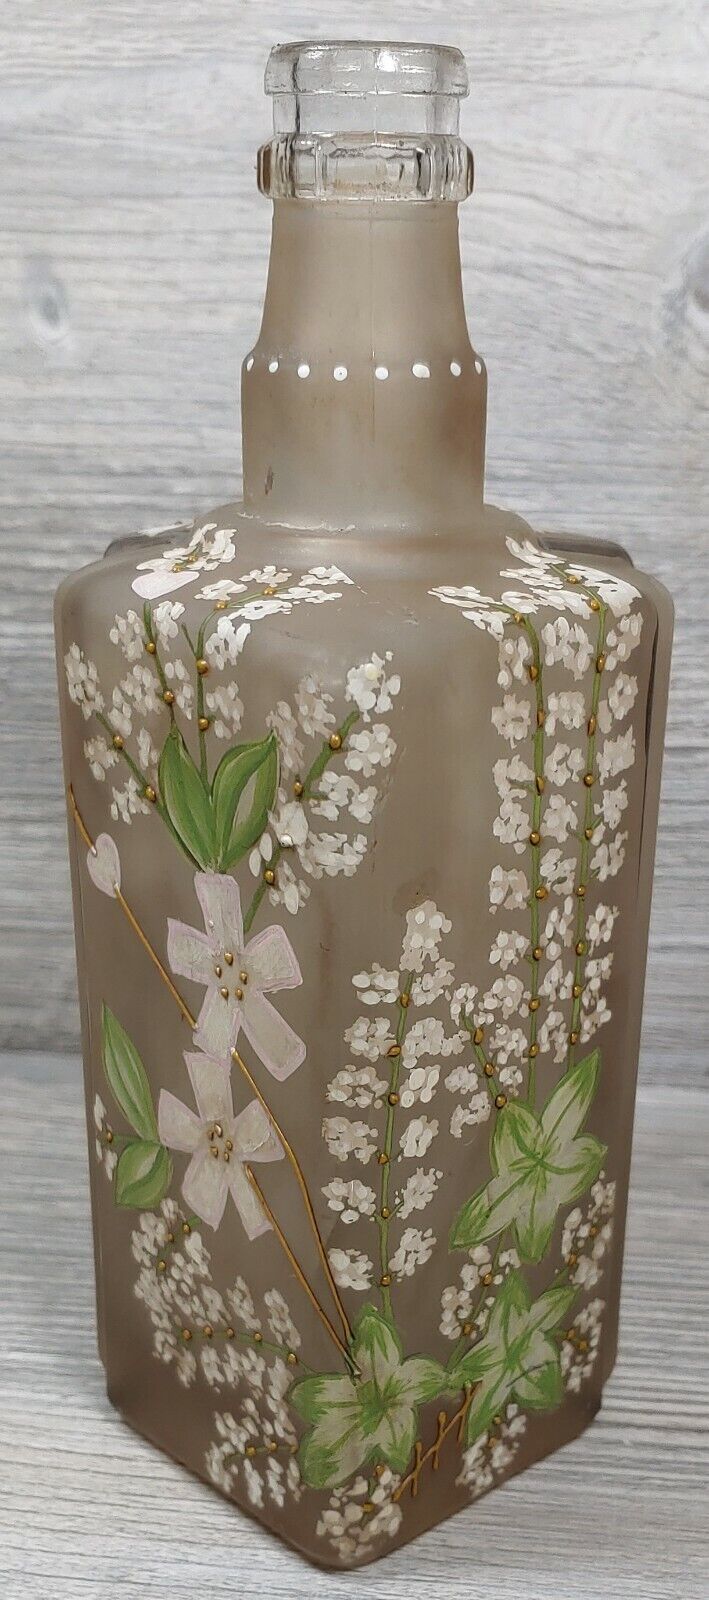 Japanese Glass Decanter Bottle Hand Painted Cherry Blossom Floral Design Vintage